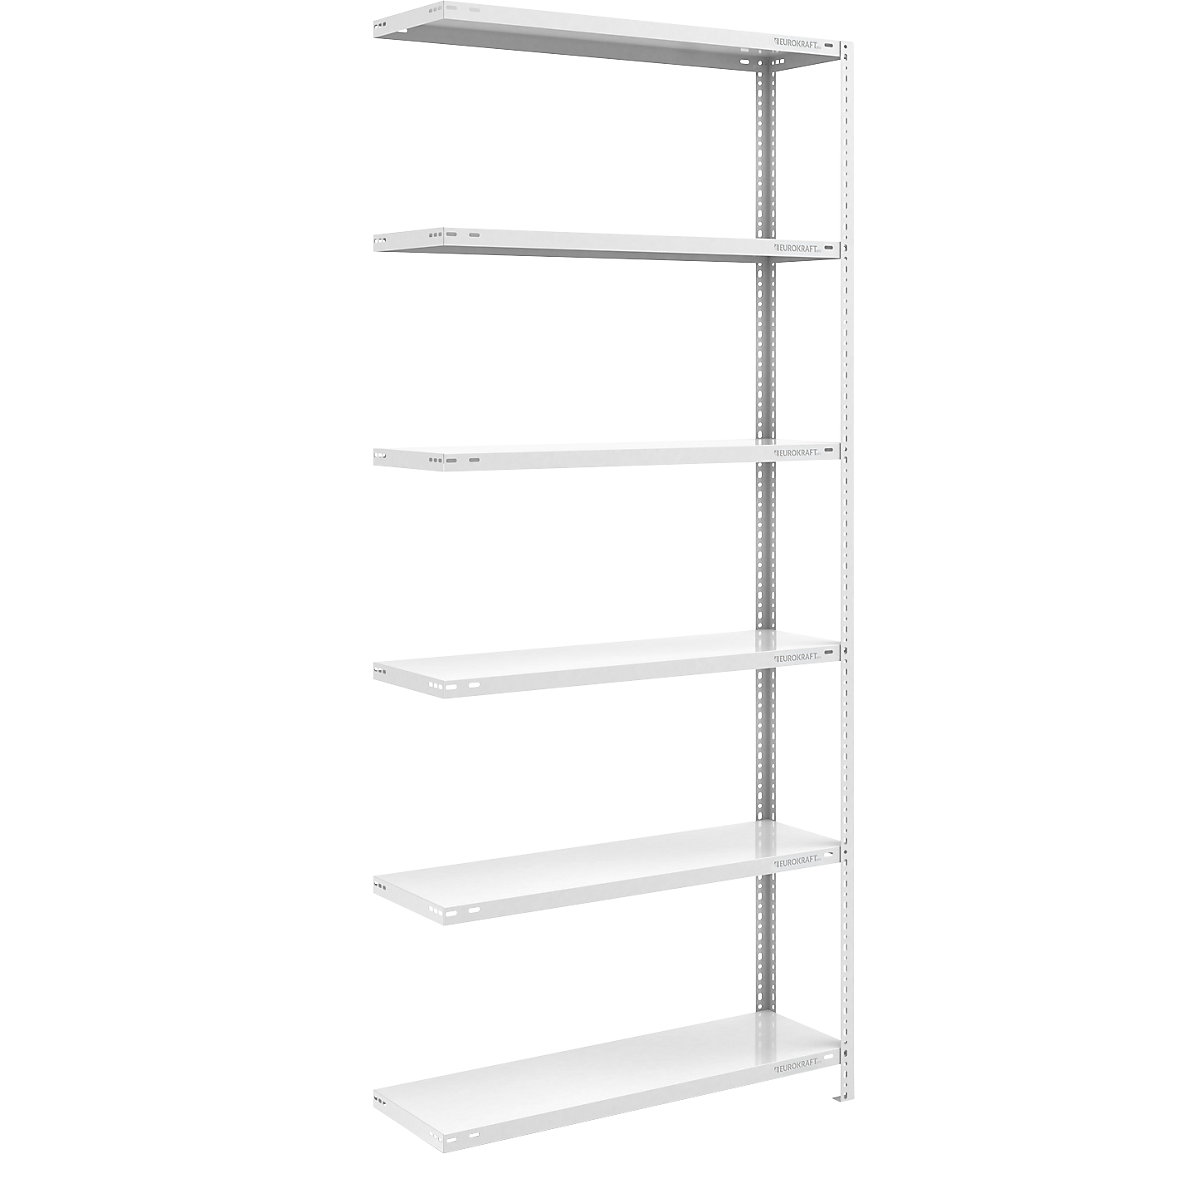 Bolt-together shelf unit, light duty, plastic coated – eurokraft pro, shelf unit height 2500 mm, shelf width 1000 mm, depth 400 mm, extension shelf unit-13